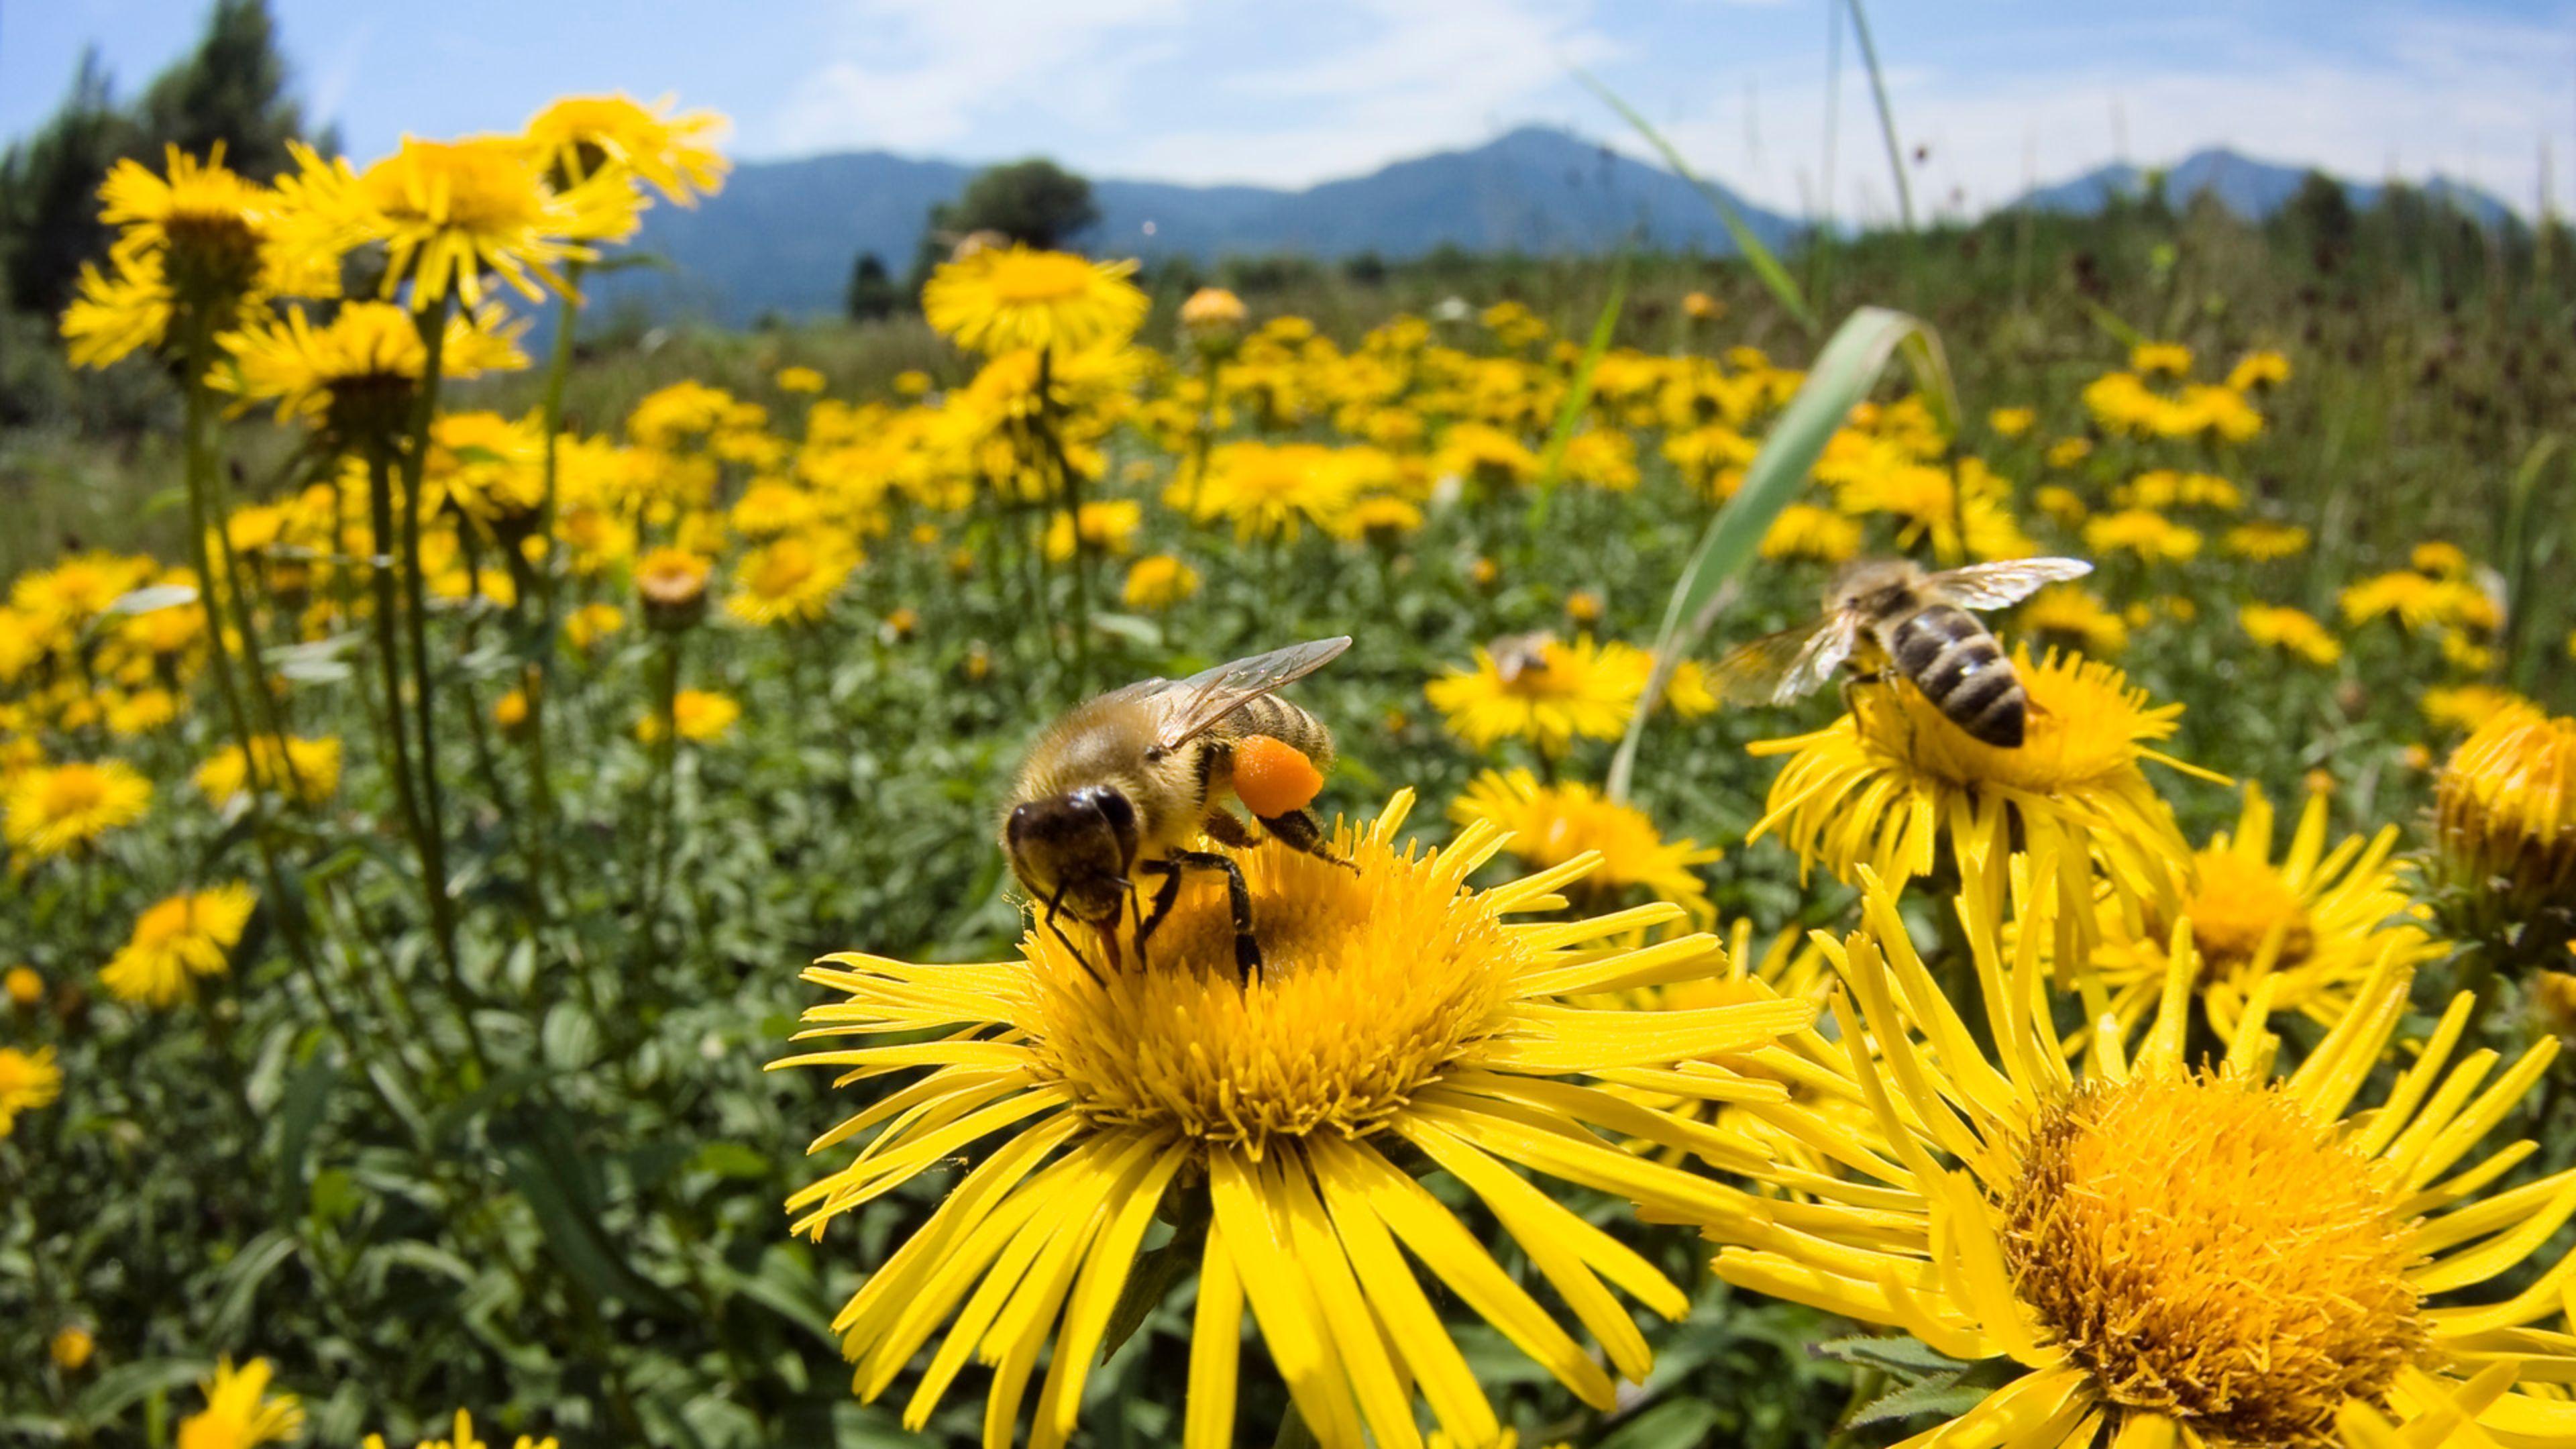 Free photo: Bees on Sunflower, Sunflower, Petals